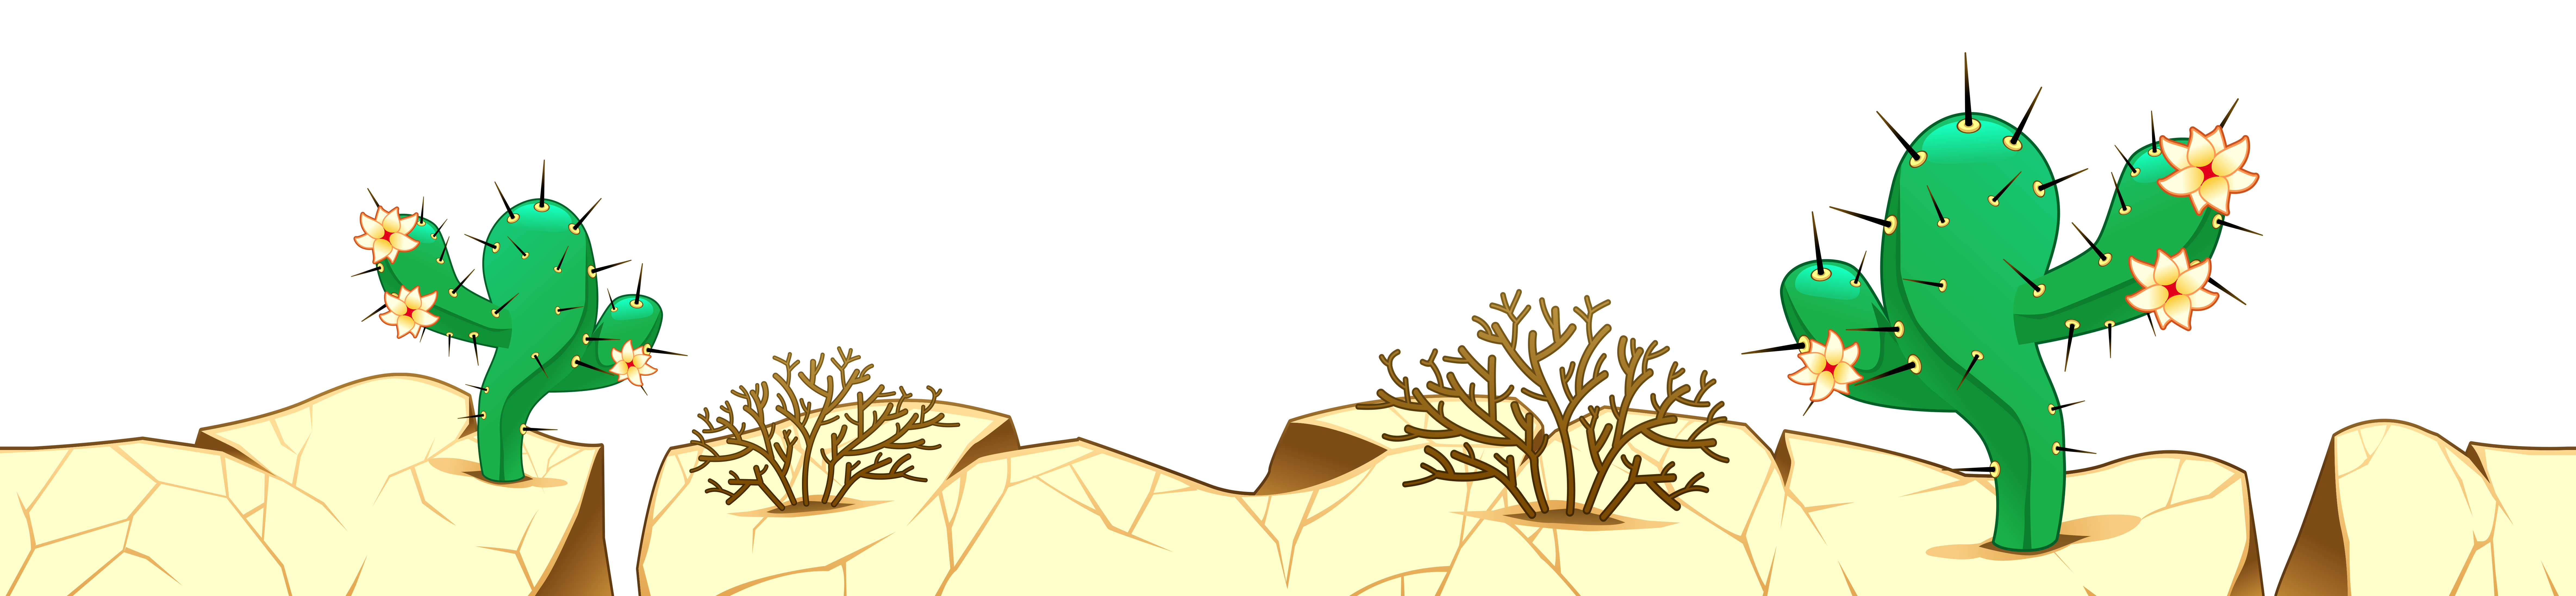 Coyote clipart desert biome, Coyote desert biome Transparent